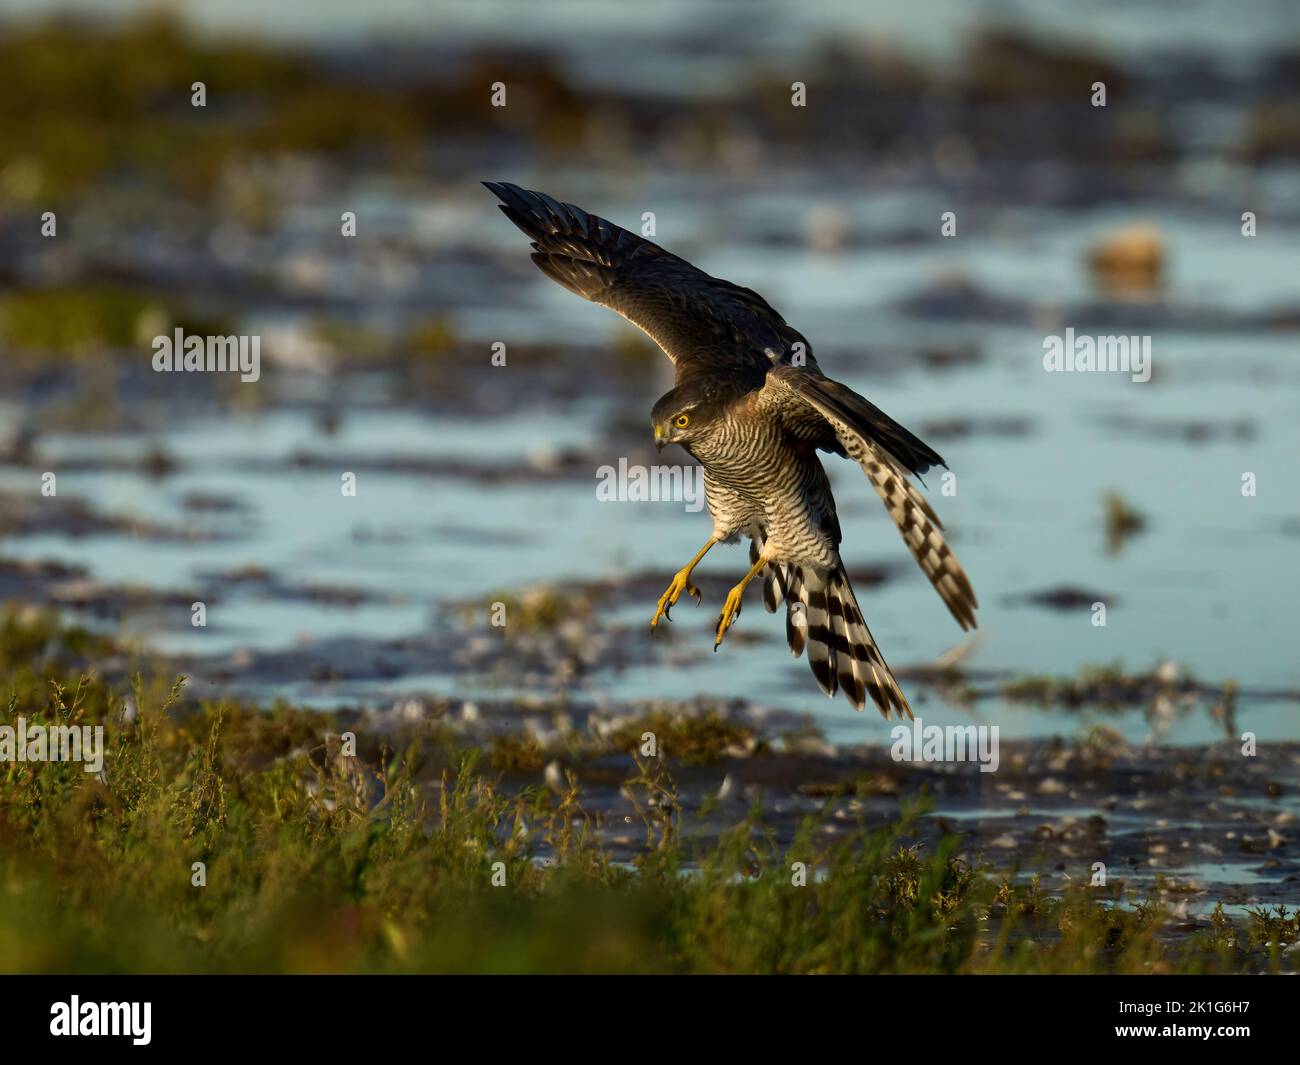 Eurasian sparrowhawk (Accipiter nisus) in its natural environment Stock Photo